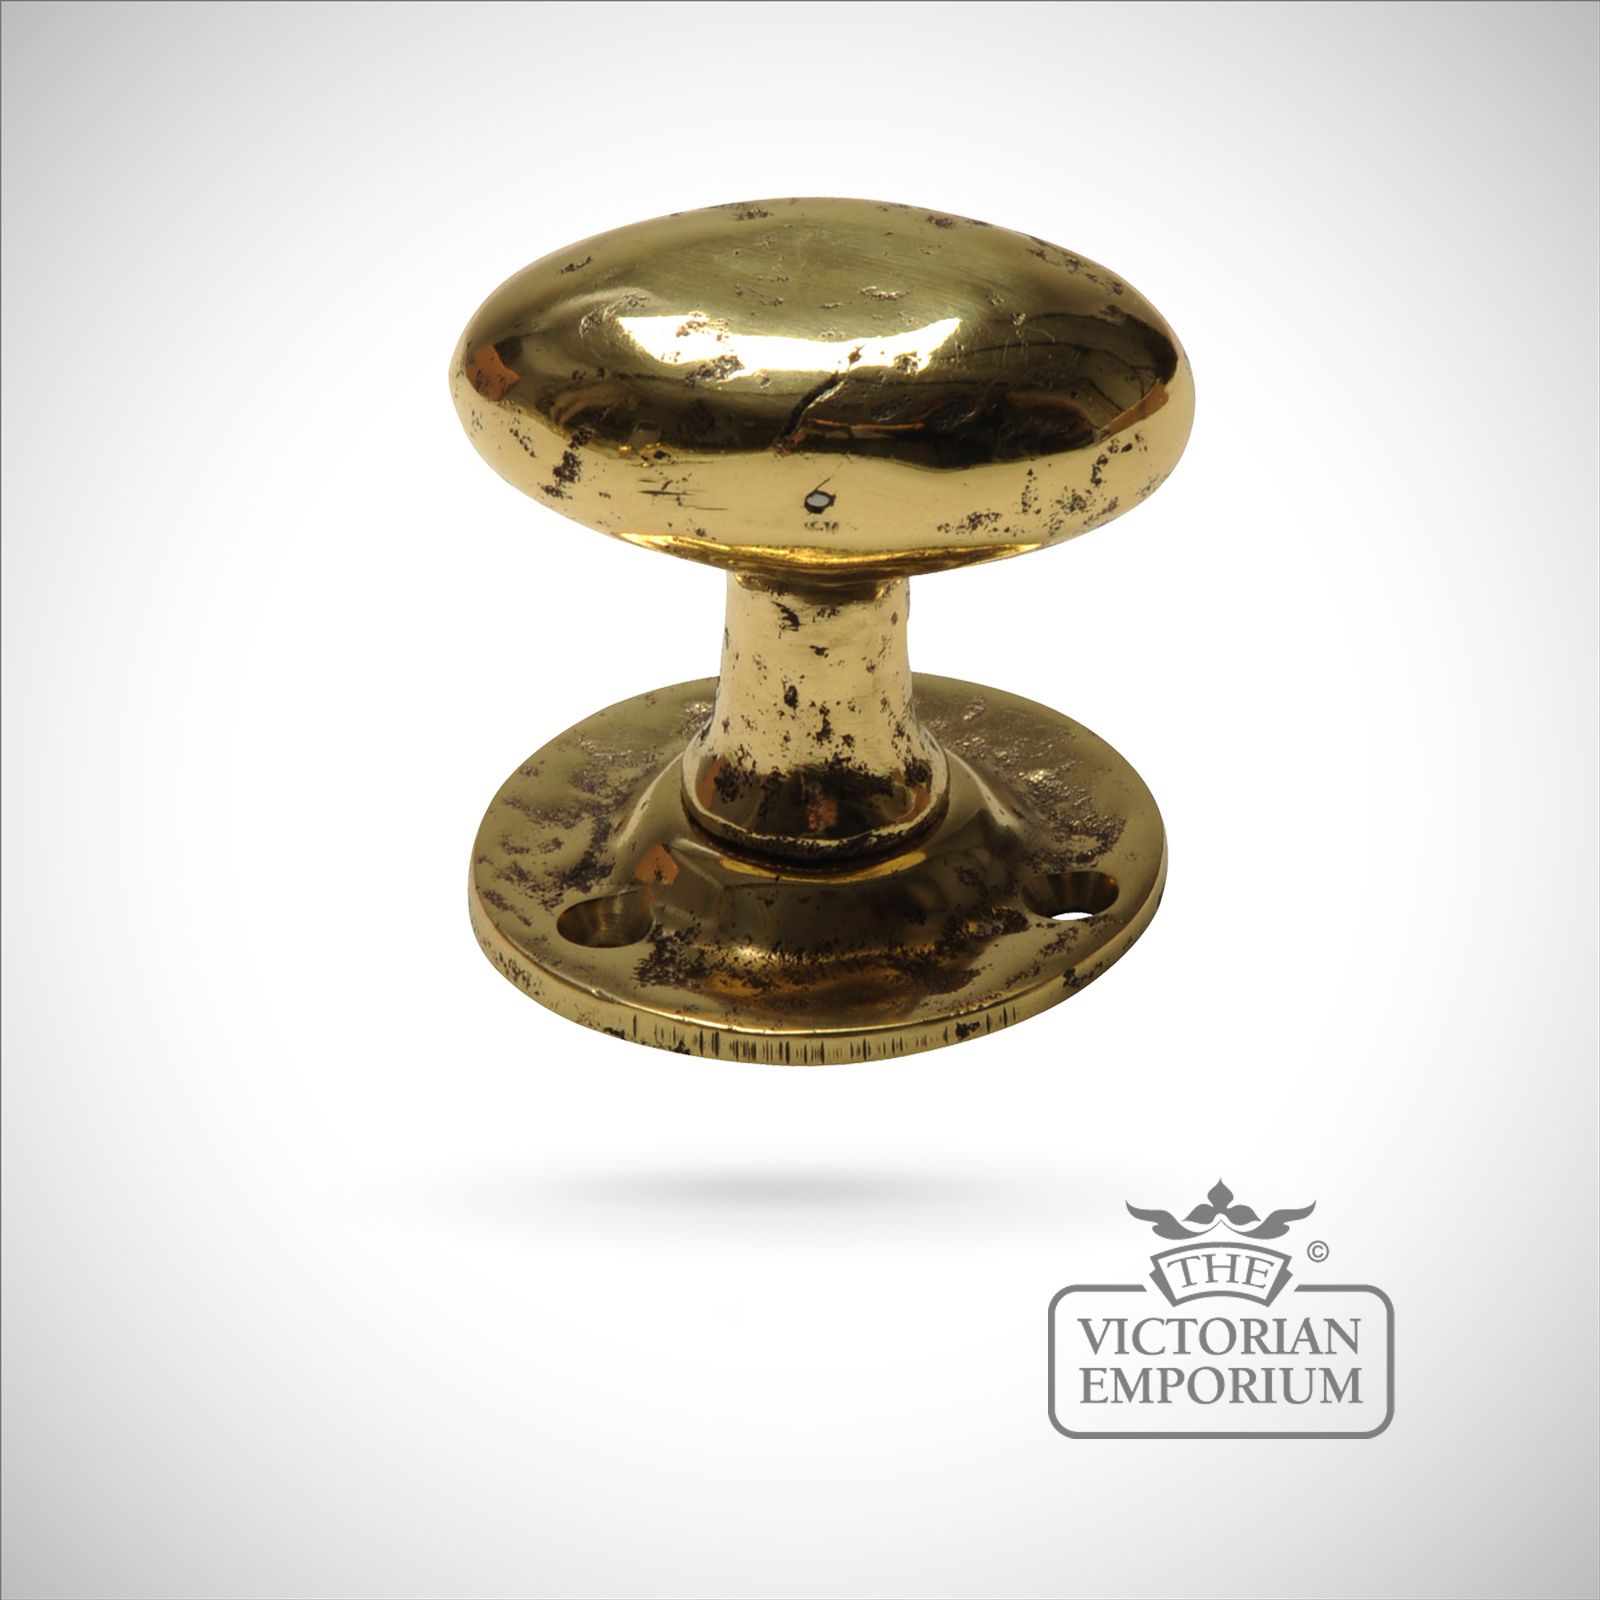 Cast brass rim or mortice knob